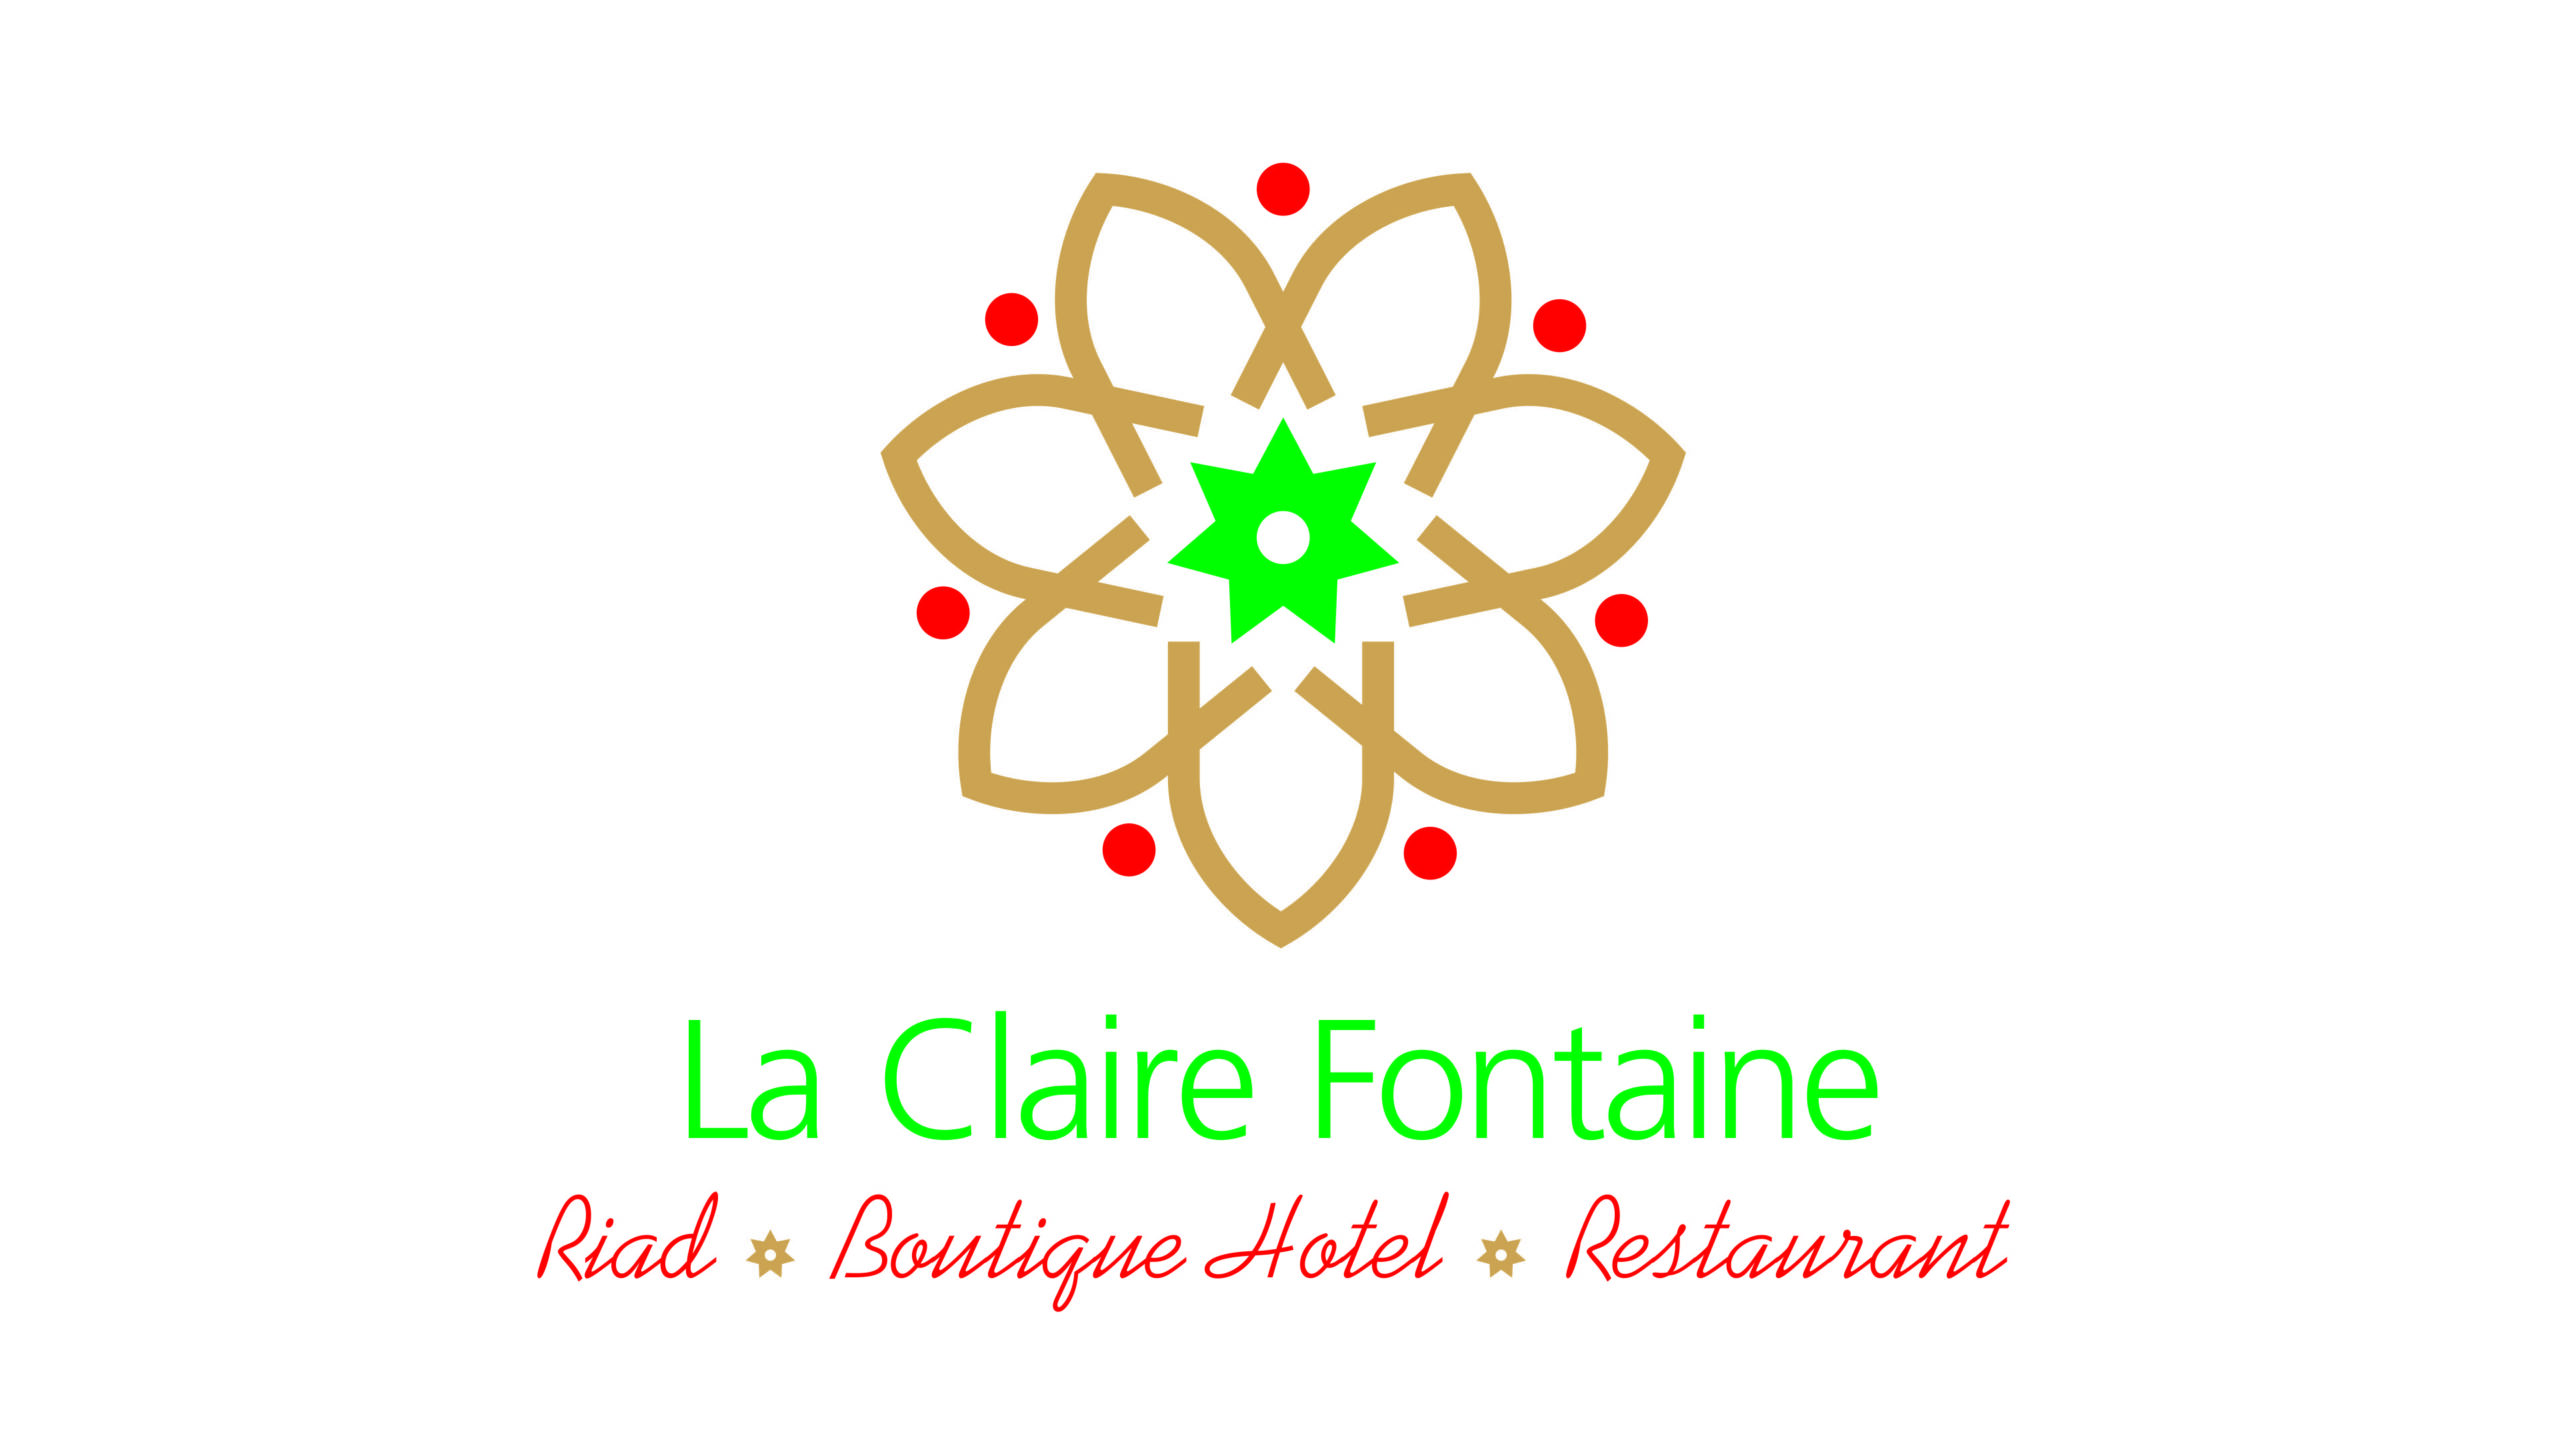 La Claire Fontaine